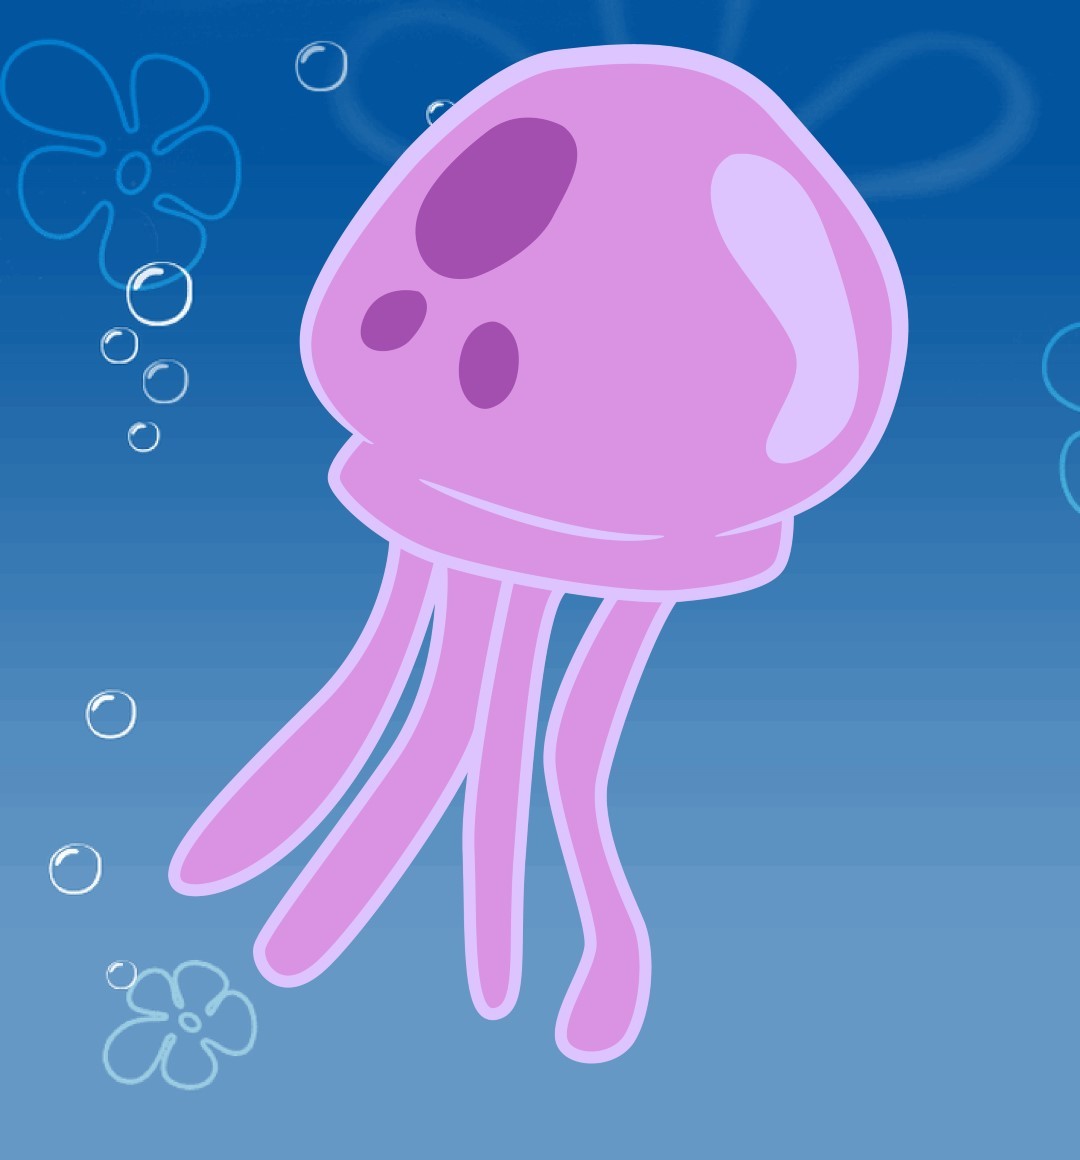 spongebob jellyfishing wallpaper